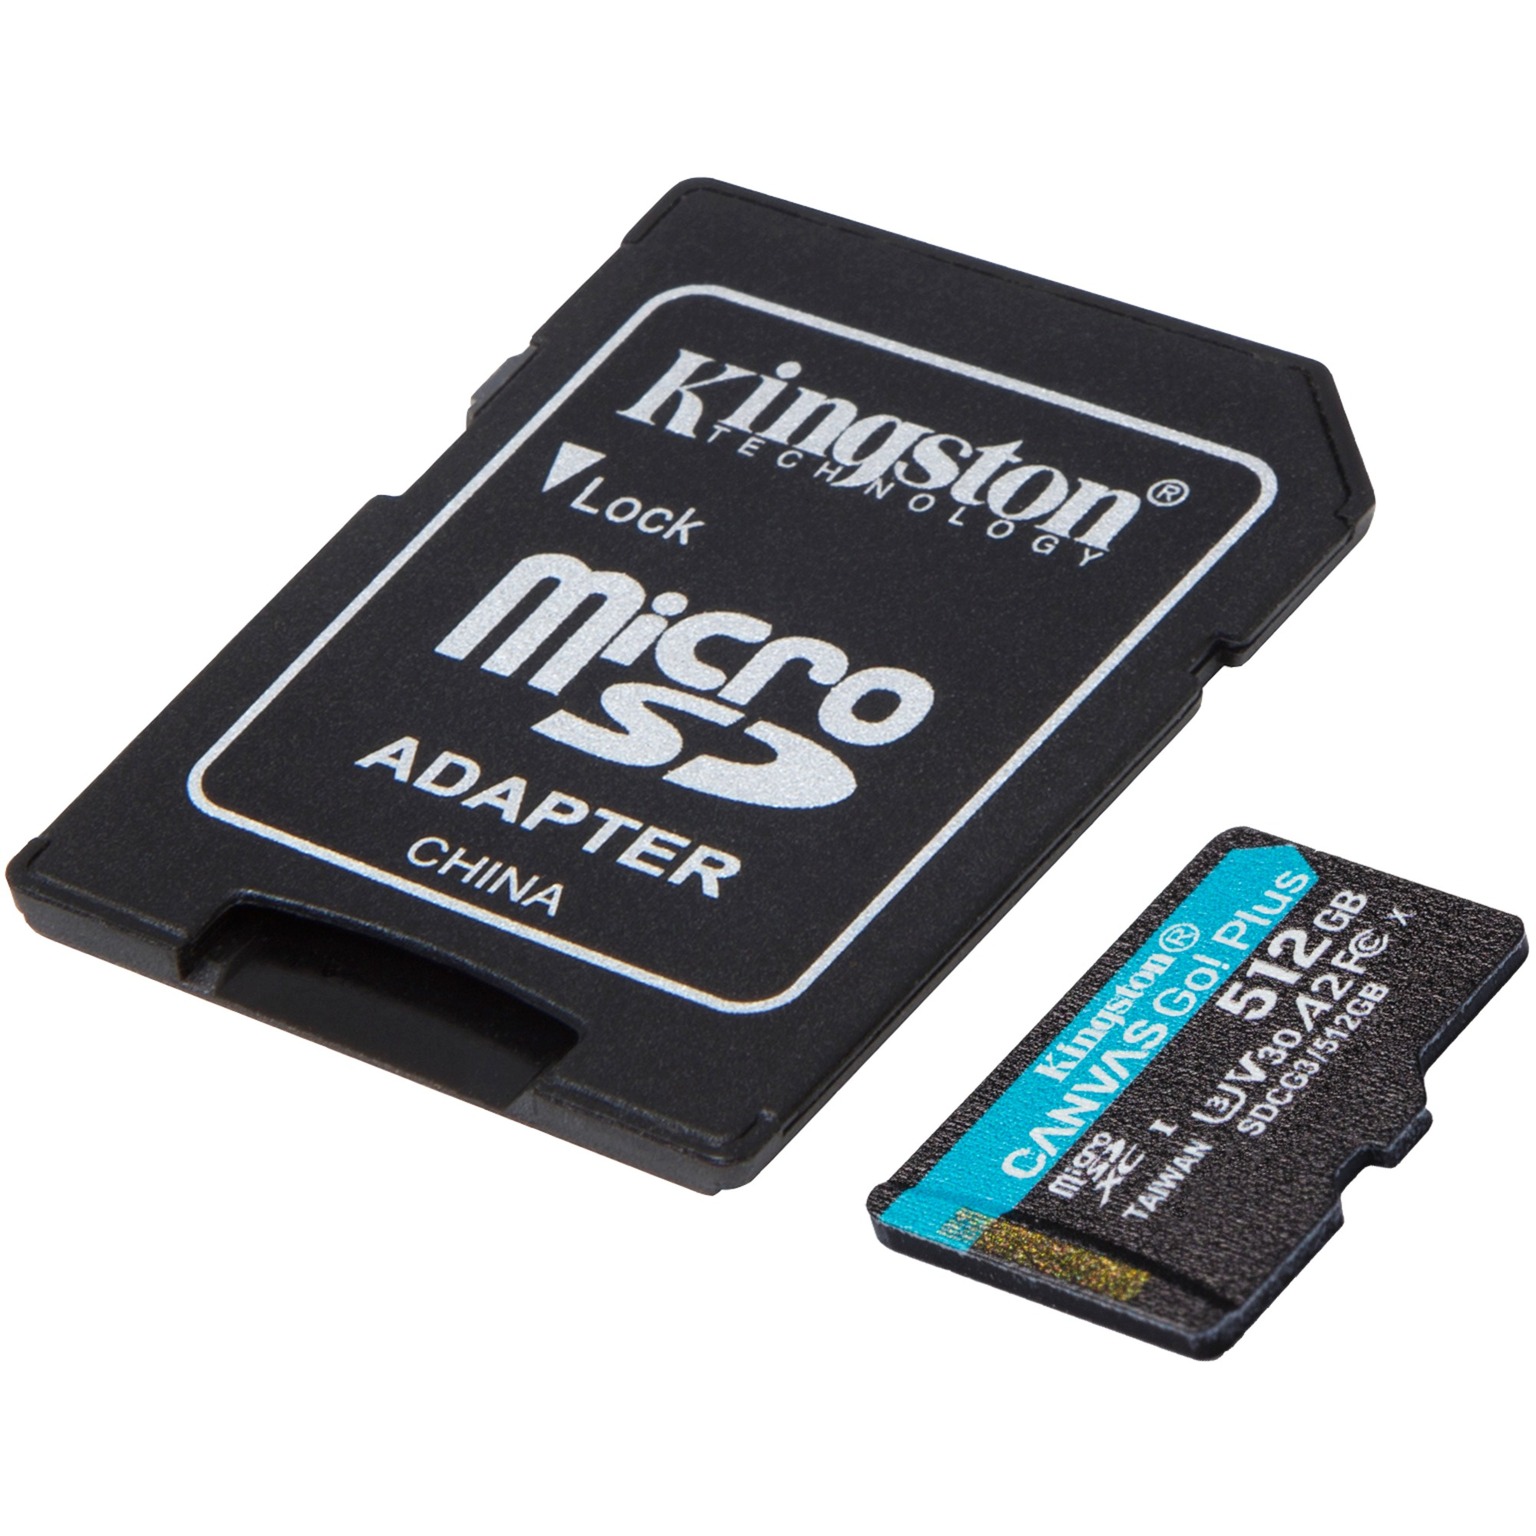 Image of Alternate - Canvas Go! Plus 512 GB microSDXC, Speicherkarte online einkaufen bei Alternate